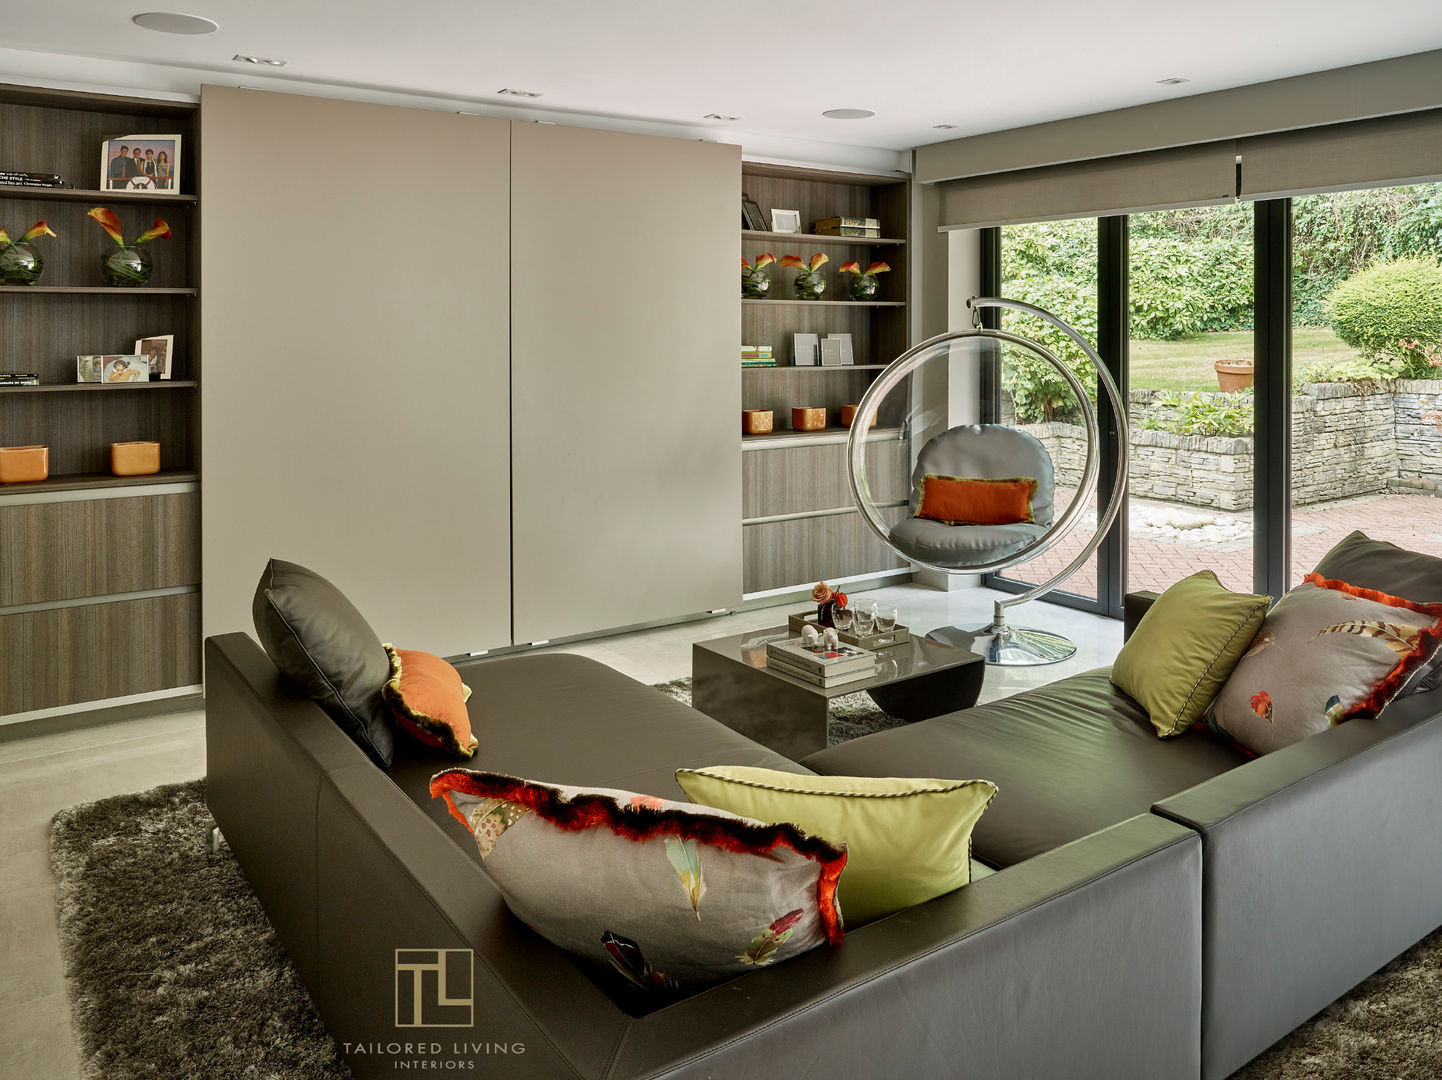 Versatile design Tailored Living Interiors Cocinas modernas Kitchen designer,interior designer,contemporary kitchen,bespoke design